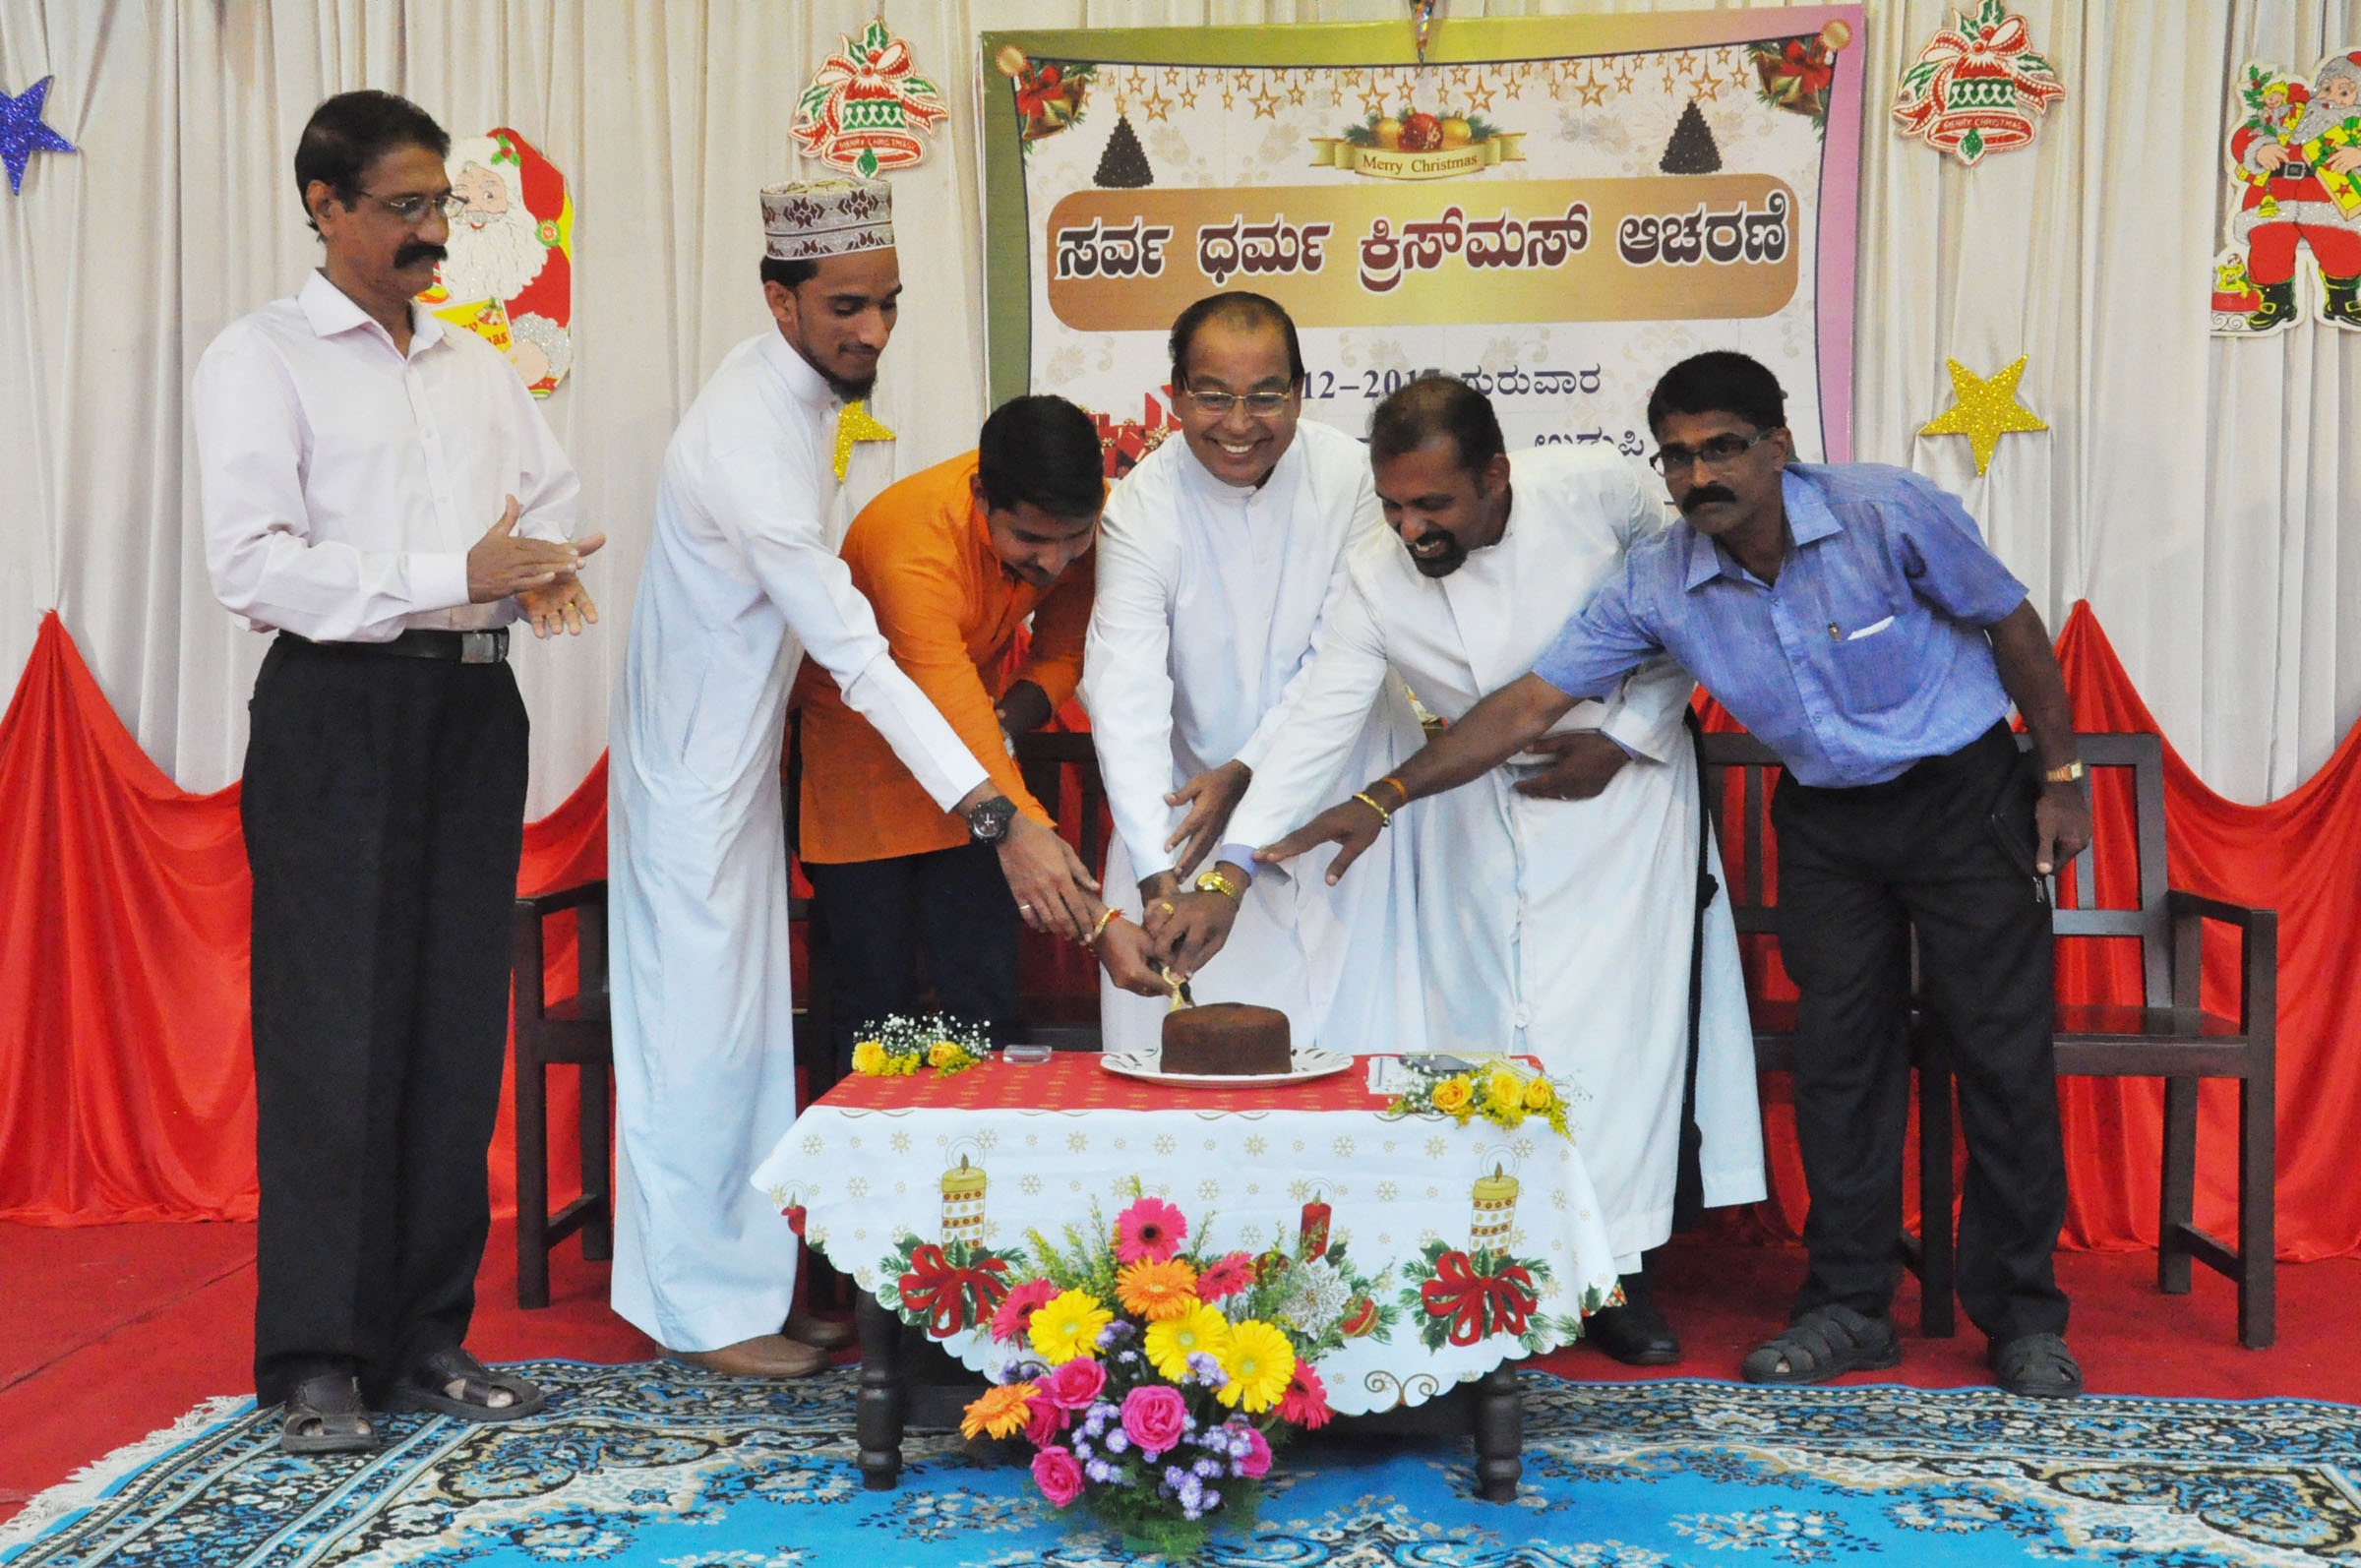 Sarva Dharma Christmas celebration held at Udupi